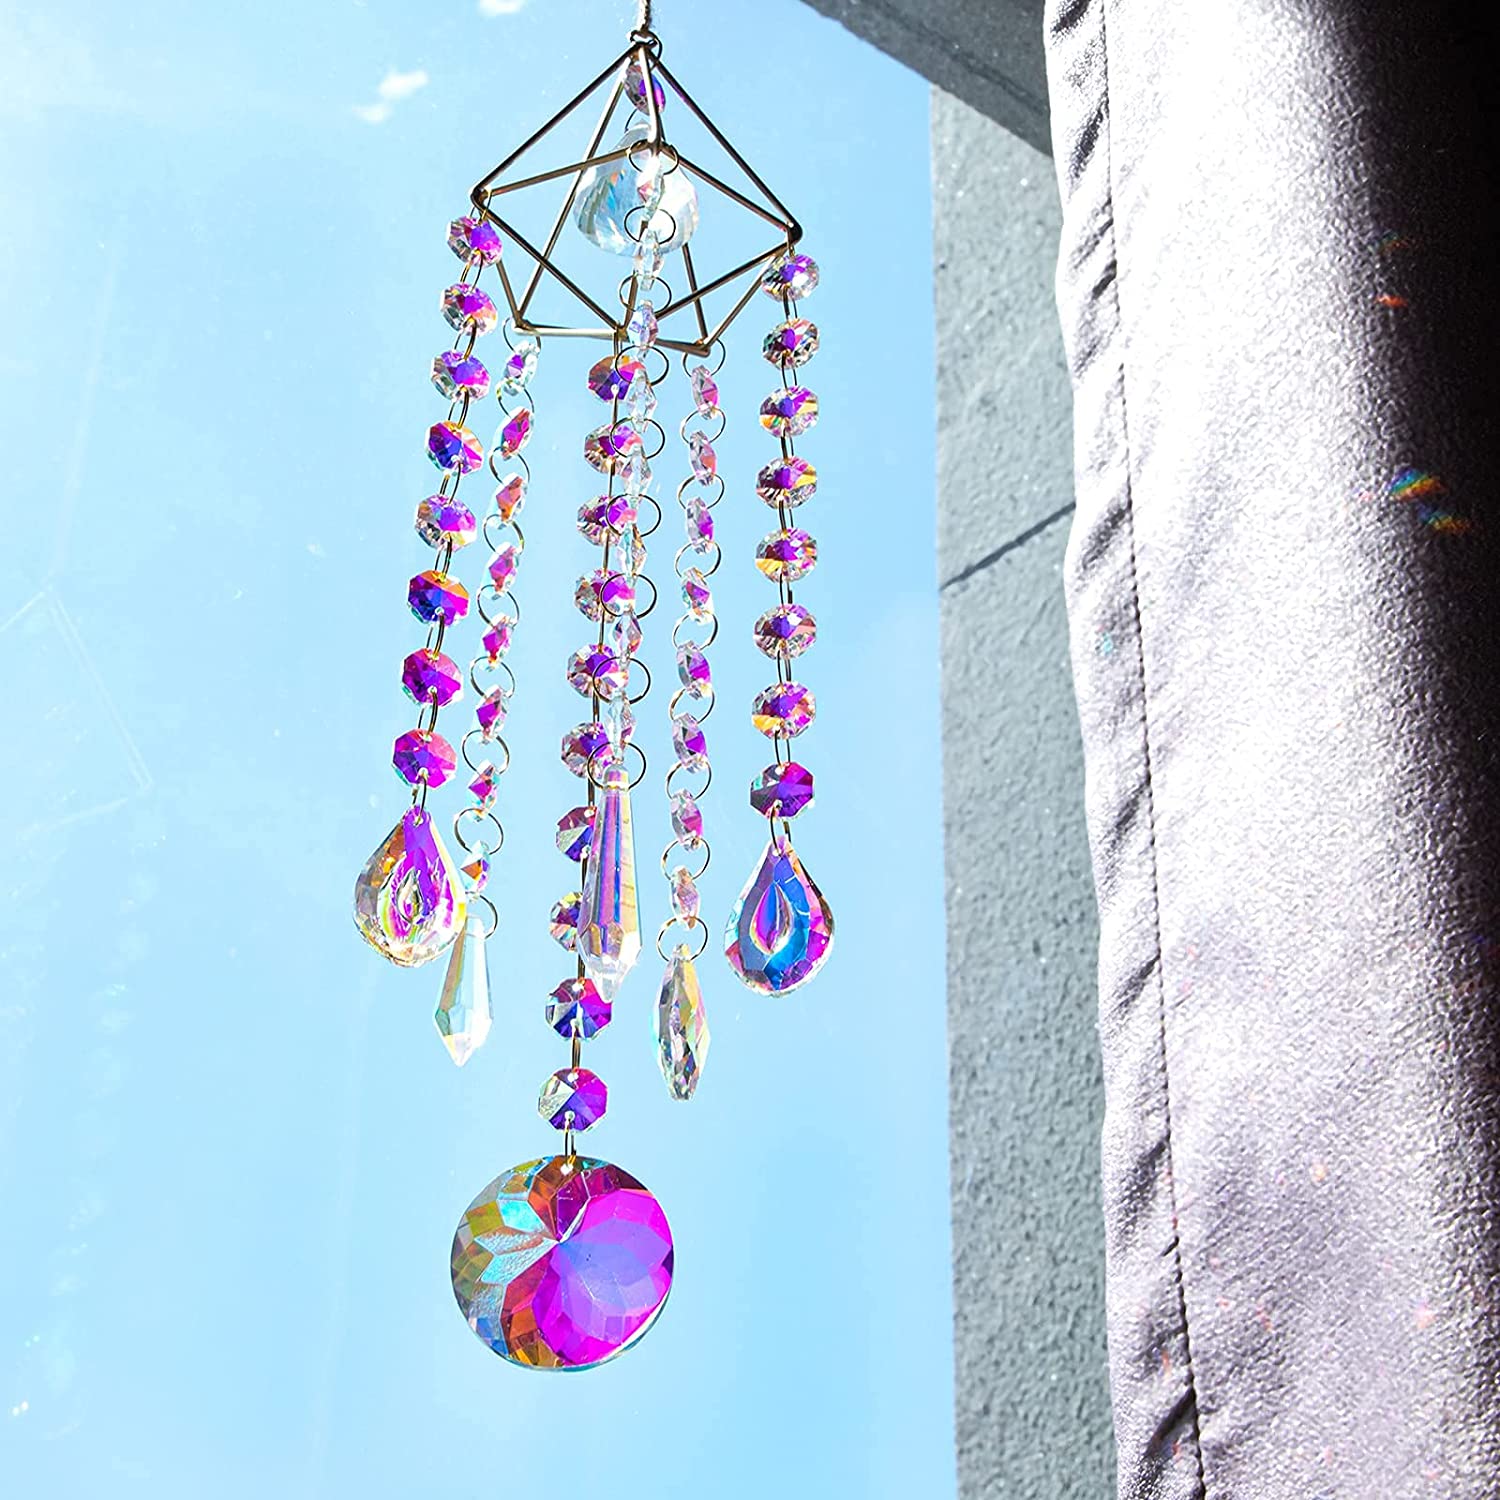 H&D HYALINE & DORA Chandelier Wind Chimes AB Coating Crystal Prisms Hanging Suncatcher Pendant Home Decor Gifts 